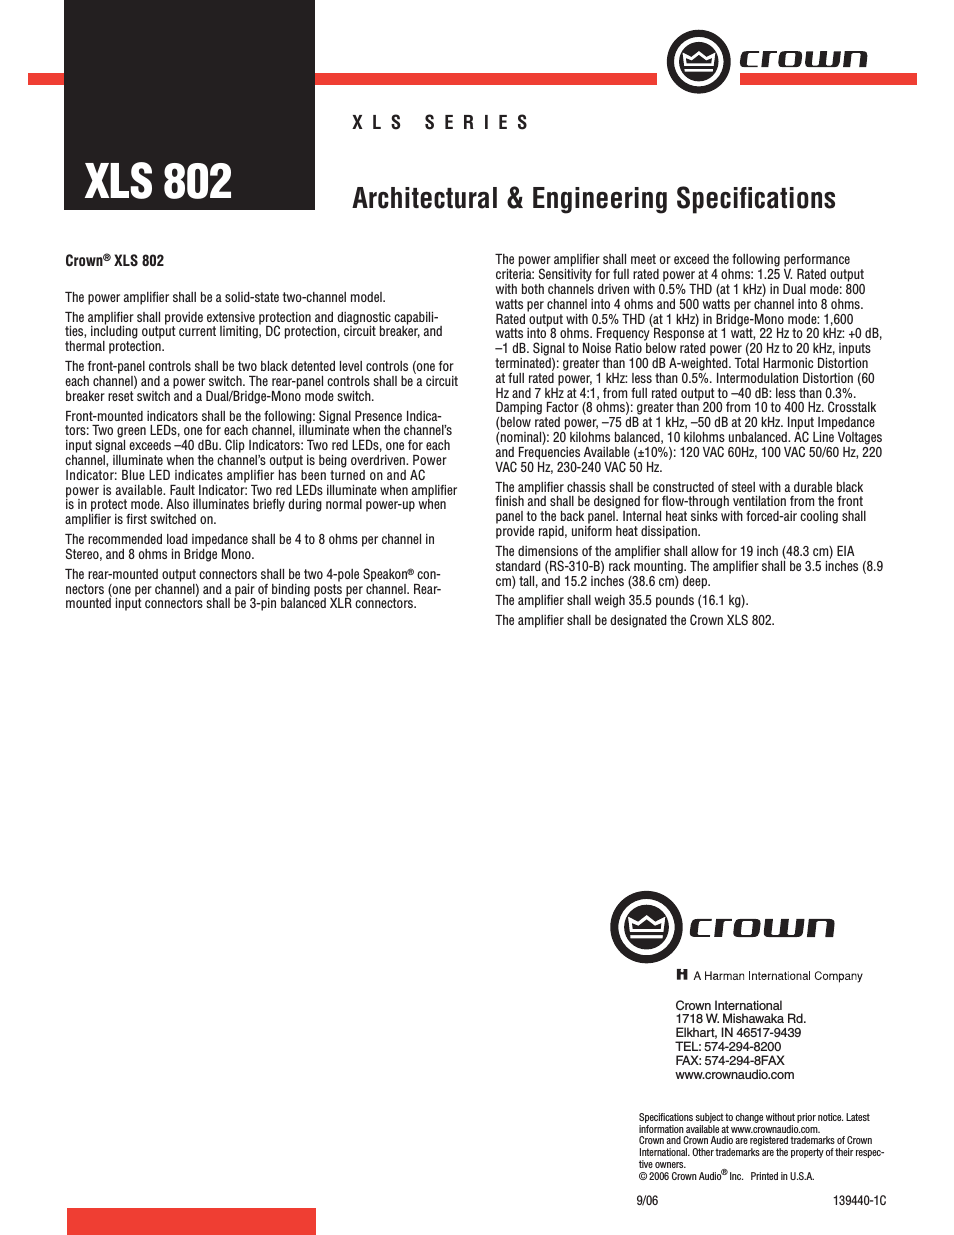 XLS-802